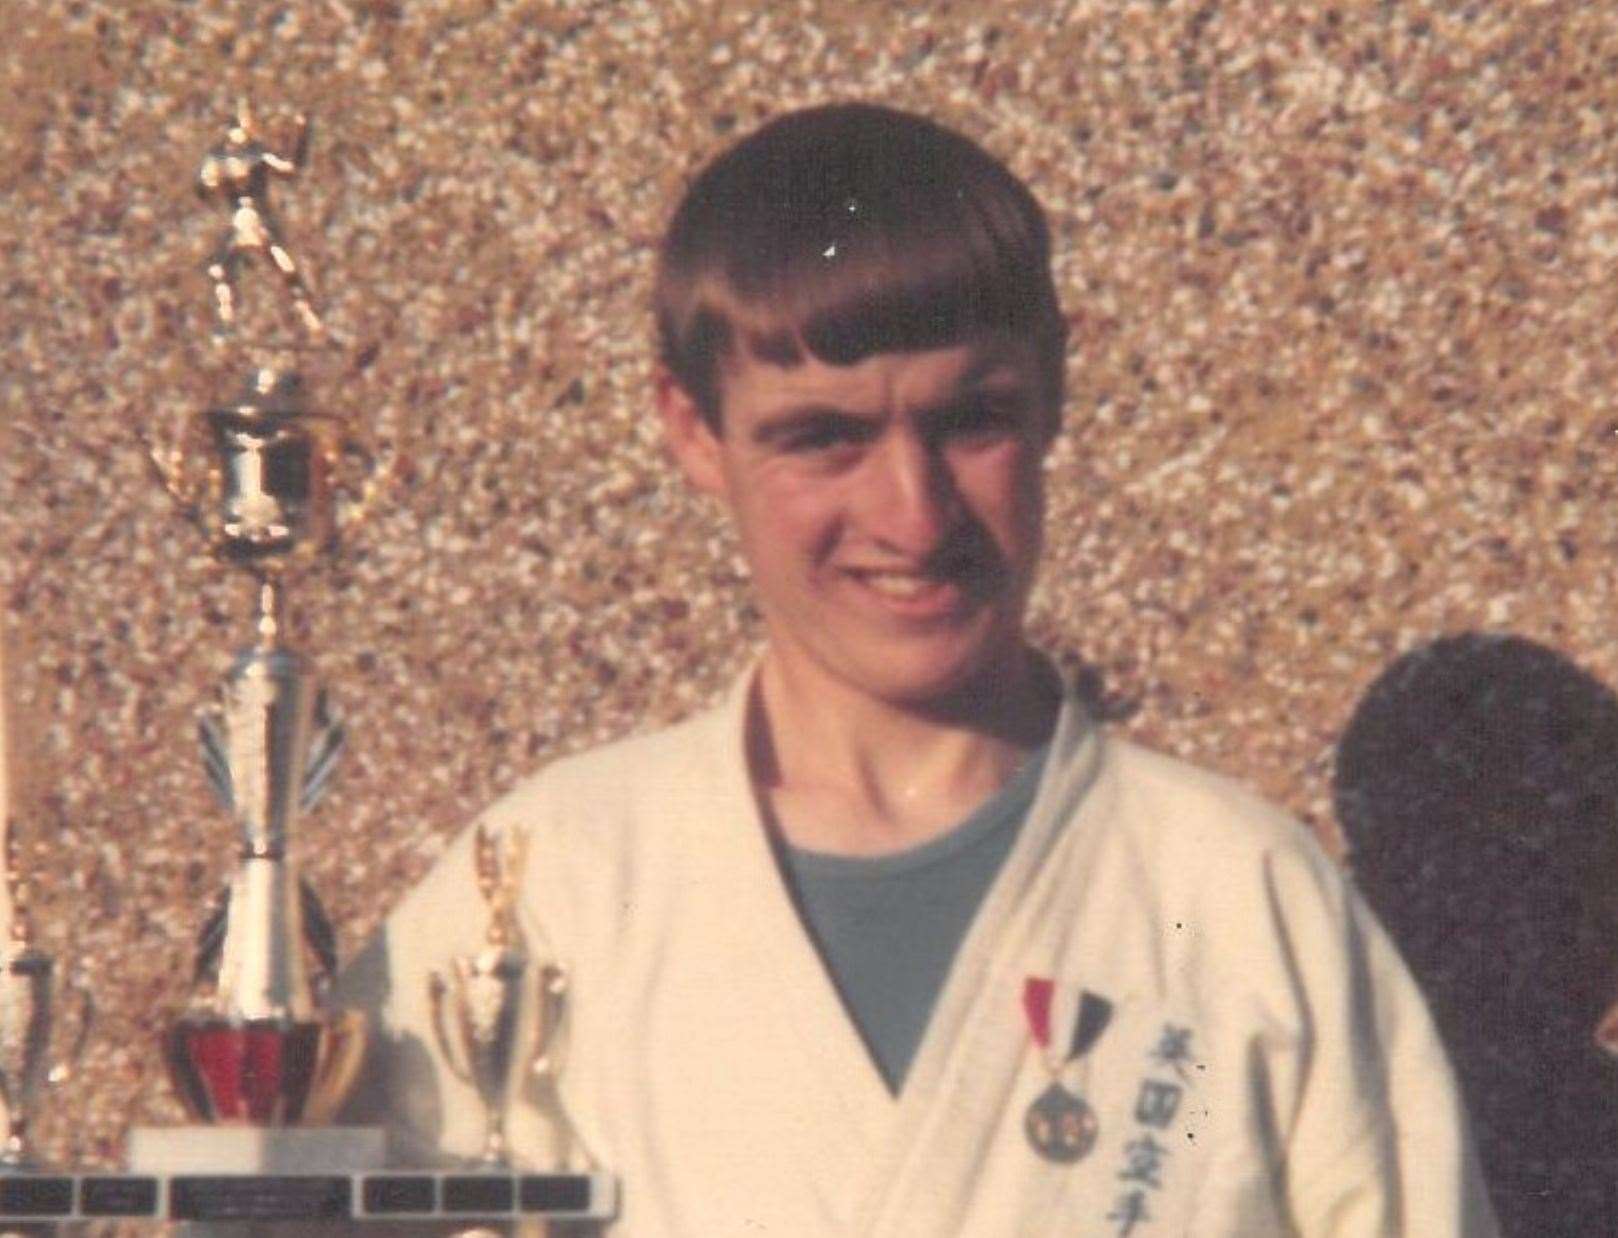 Joe Ellis celebrates a national tournament win at Ashford's Stour Centre, aged 16, in 1977